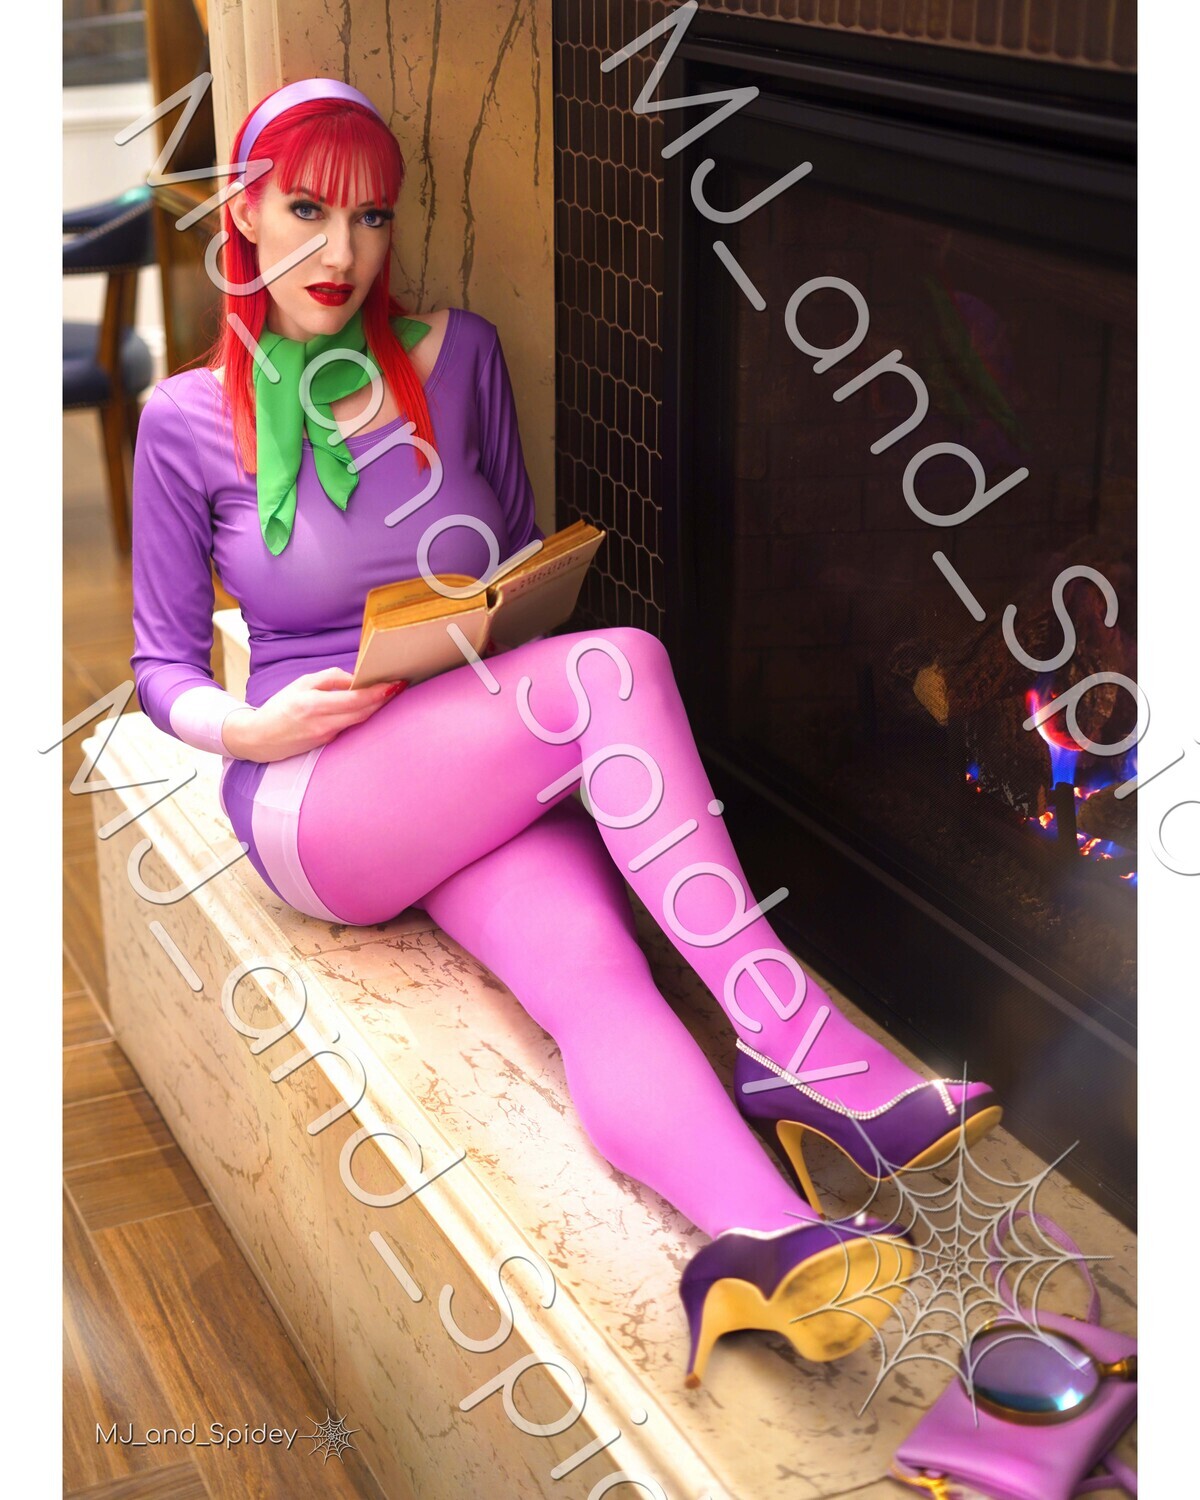 Scooby Doo - Mary Jane Watson - Daphne Blake 2 - Digital Cosplay Image (Cartoons, Velma, Stockings, Heels)